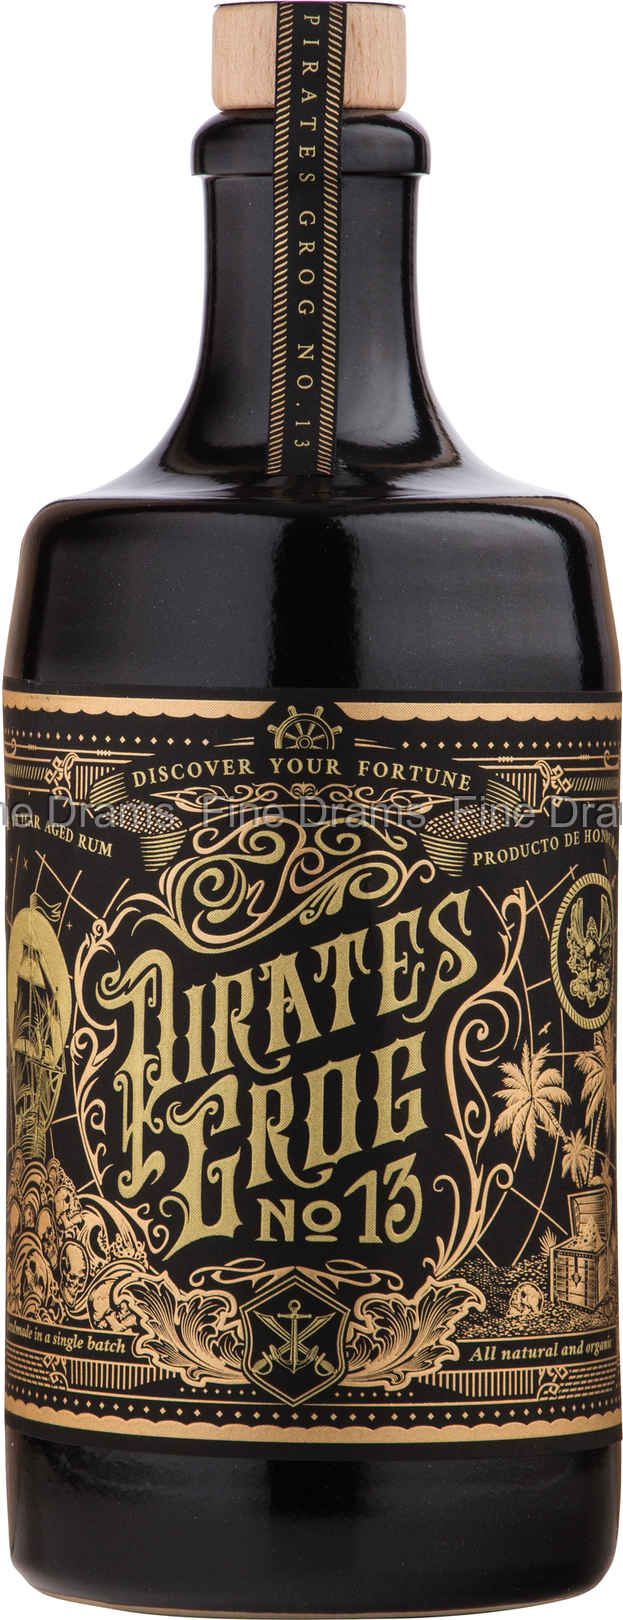 Pirate's Grog Rum